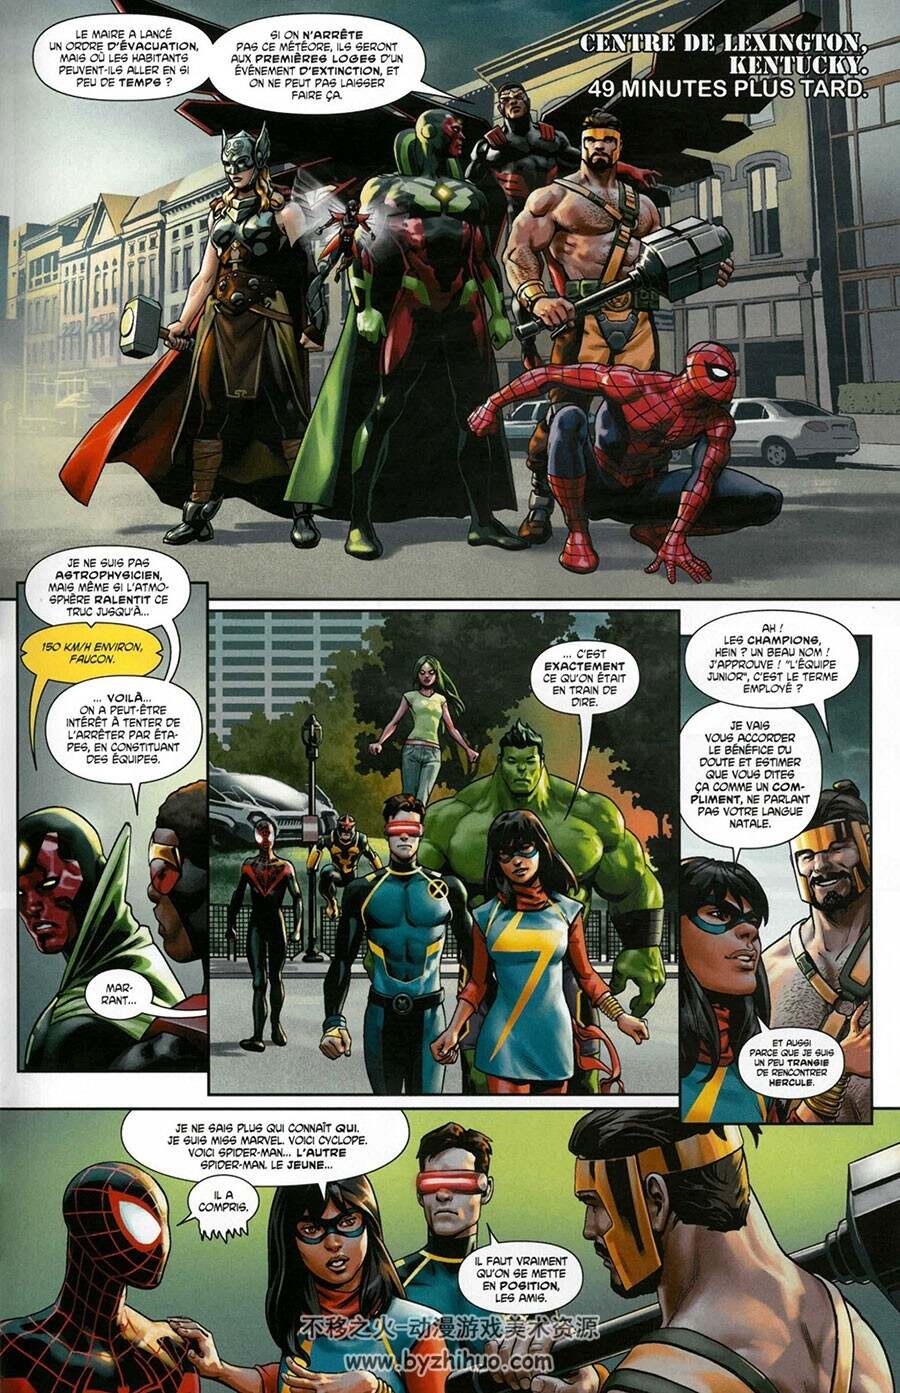 Avengers - Marvel Legacy  第1册 Jim Zub - Nick Spencer - Brian M. Bendis - Mark Wa